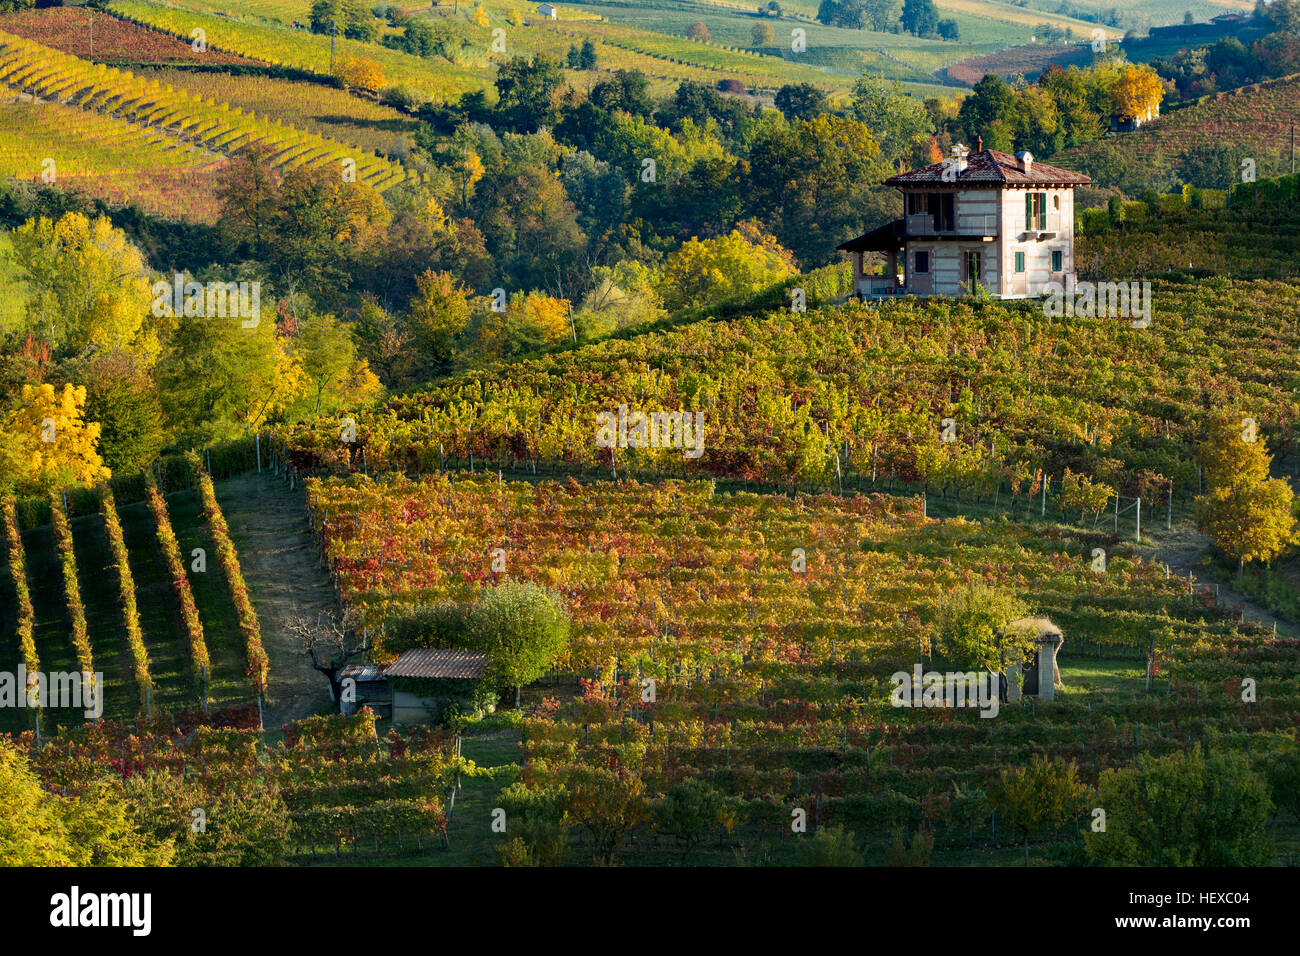 Autumn colors in the Nebbiolo vineyards near Barolo, Piemonte, Italy Stock Photo